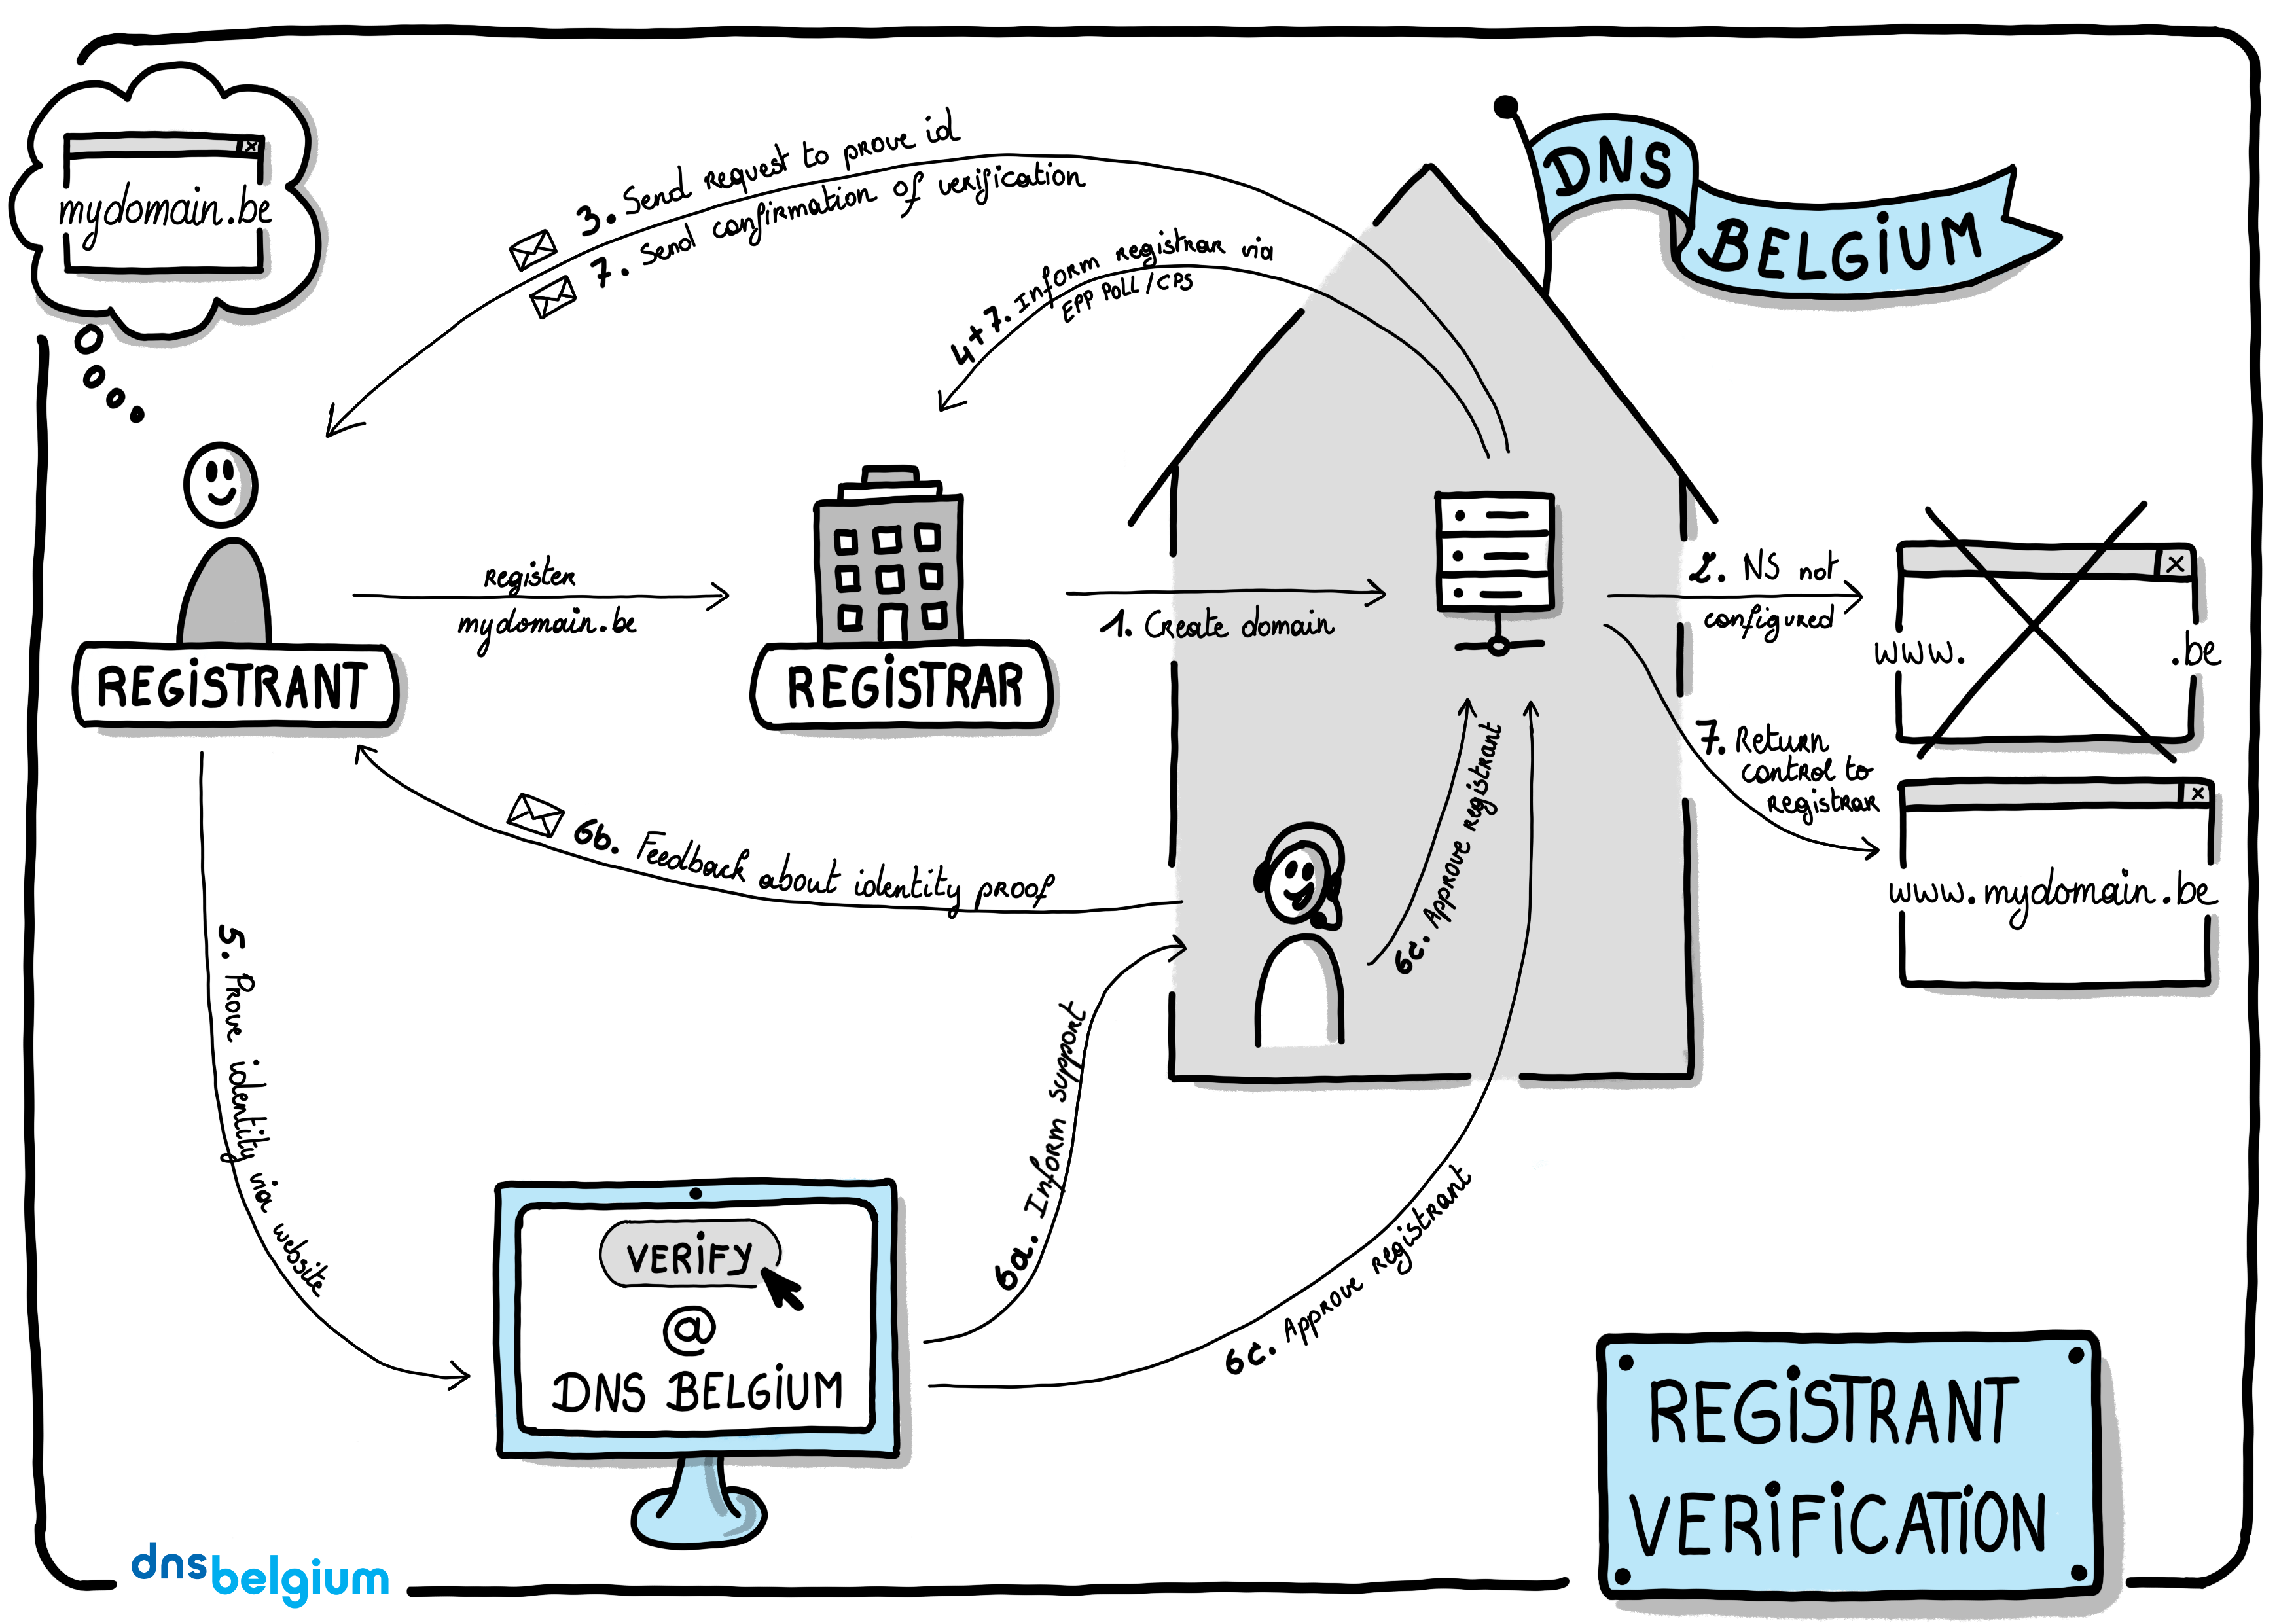 Registrant verification flow - see scenario.